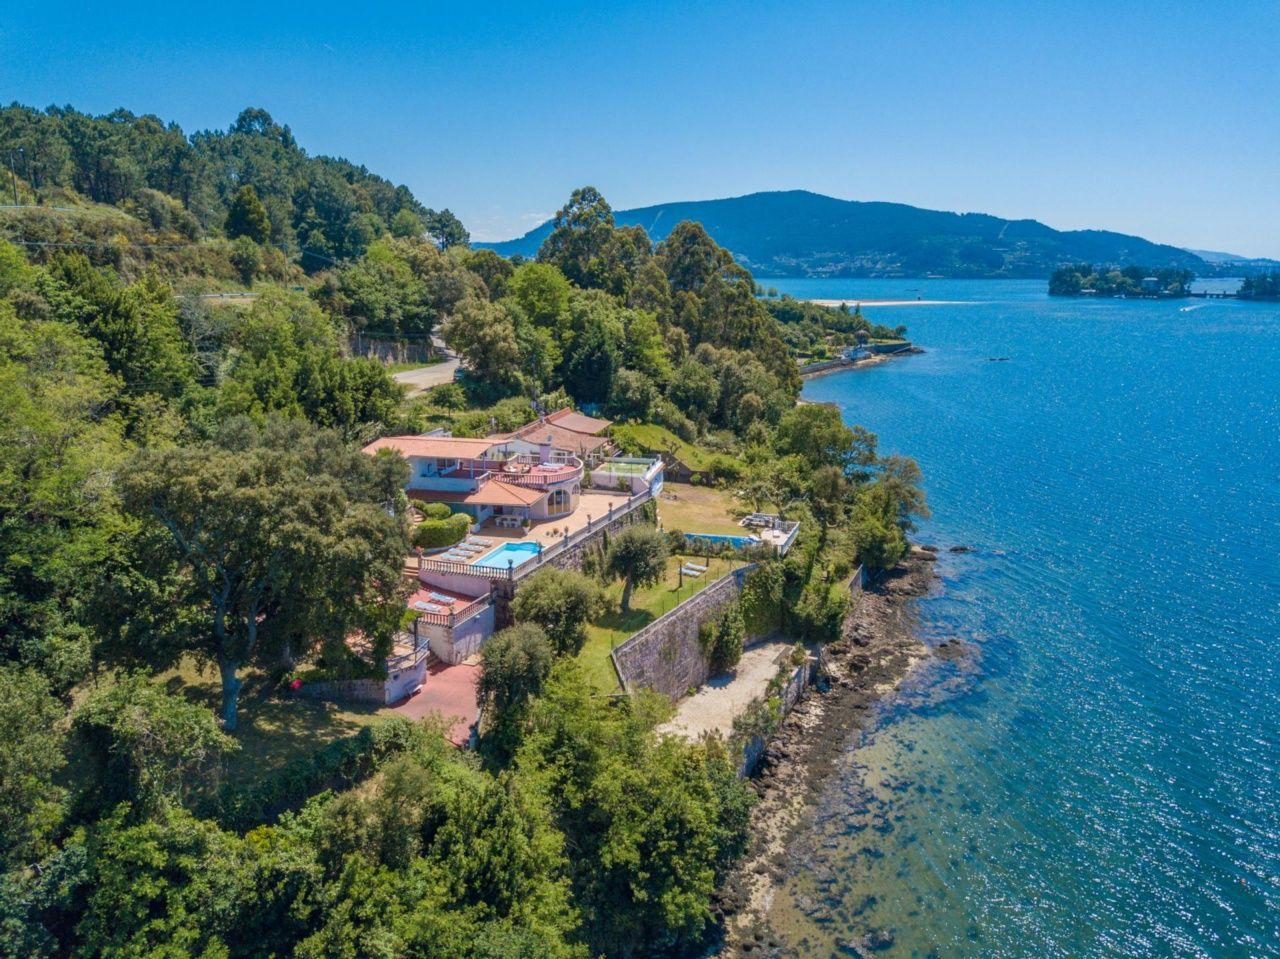 Tolle Villa oberhalb der Bucht Ria de Vigo Ferienhaus in Spanien